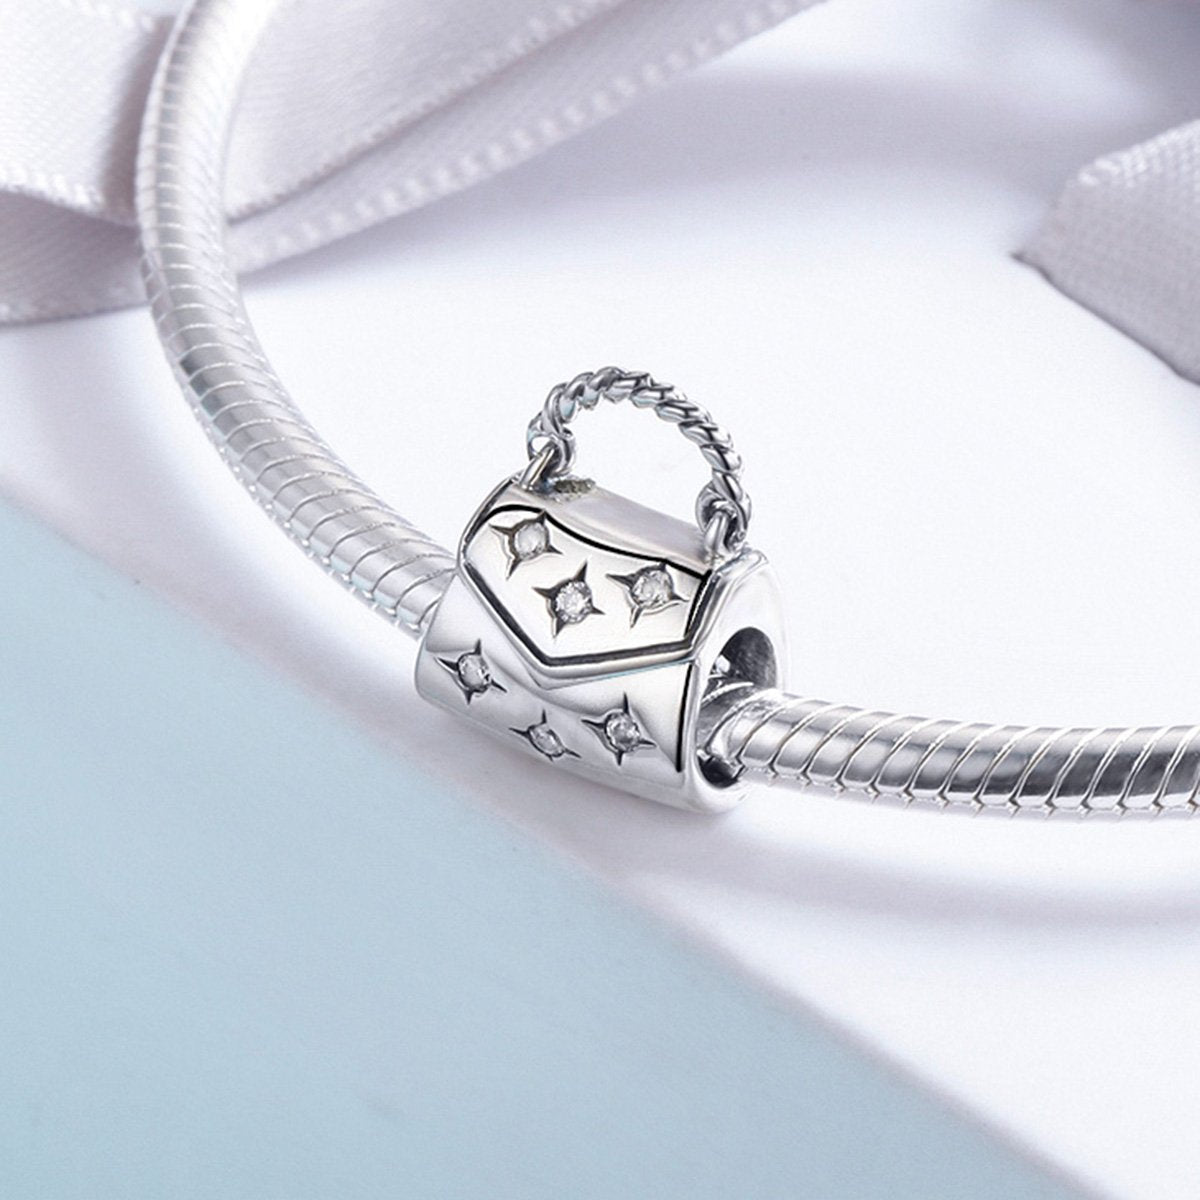 Sterling 925 silver charm the hand bag bead pendant fits Pandora charm and European charm bracelet Xaxe.com